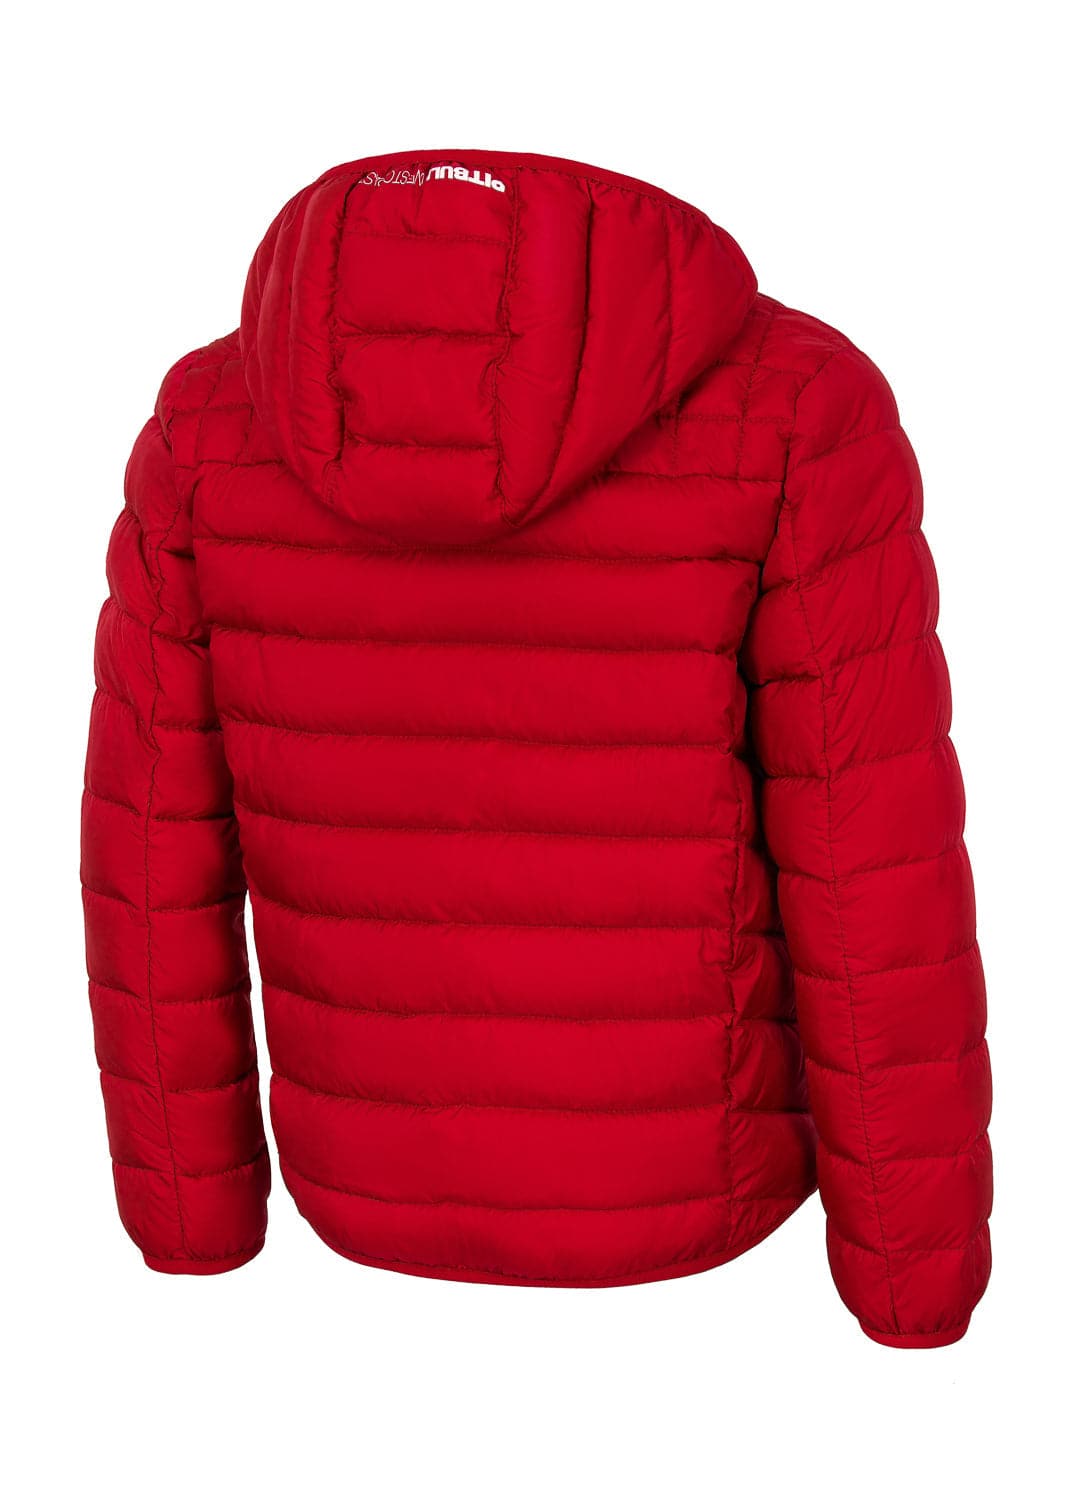 SEACOAST Kids Red Jacket - Pitbull West Coast International Store 